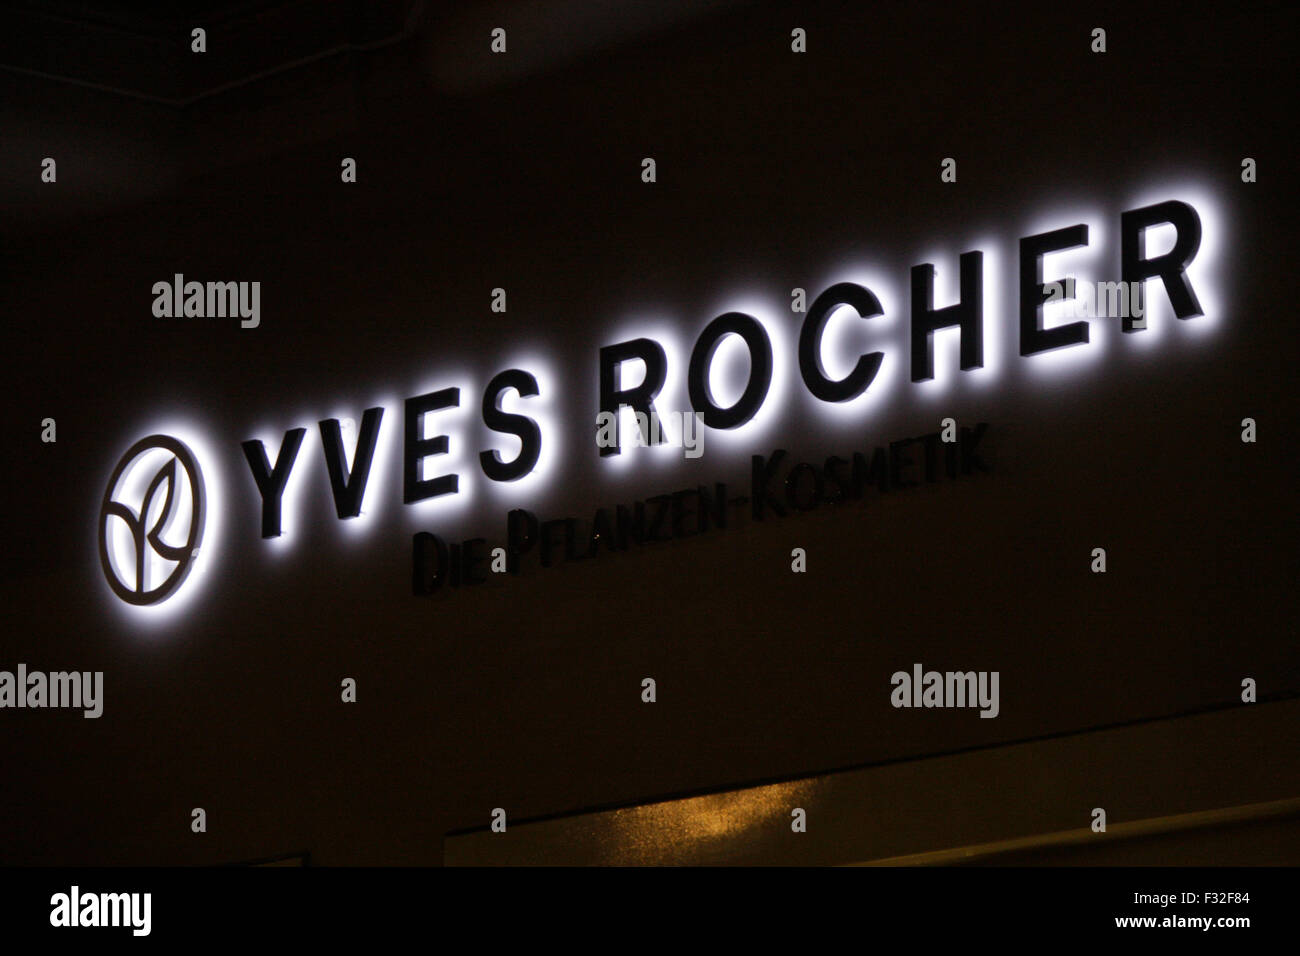 Leuchtreklame Fuer "Yves Rocher", November 2013, Berlin. Stockfoto